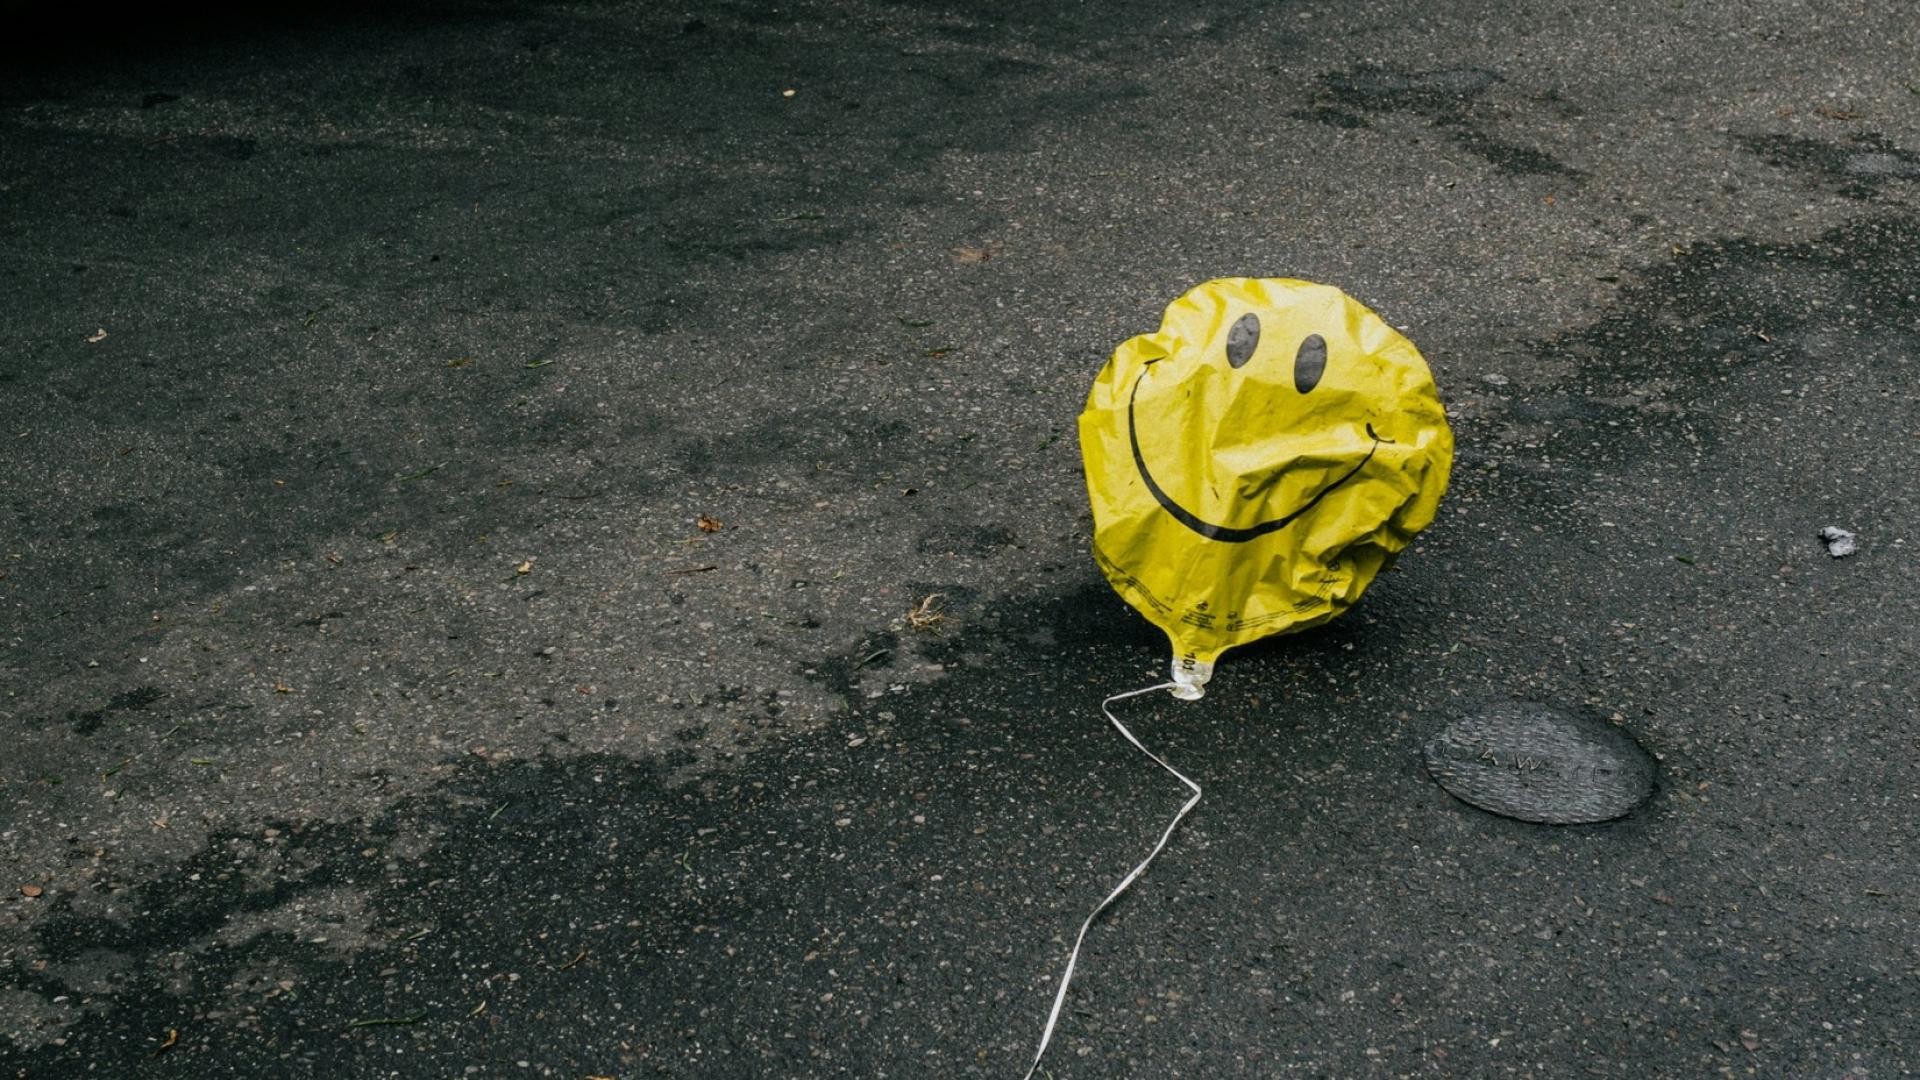 Deflated happy face balloon